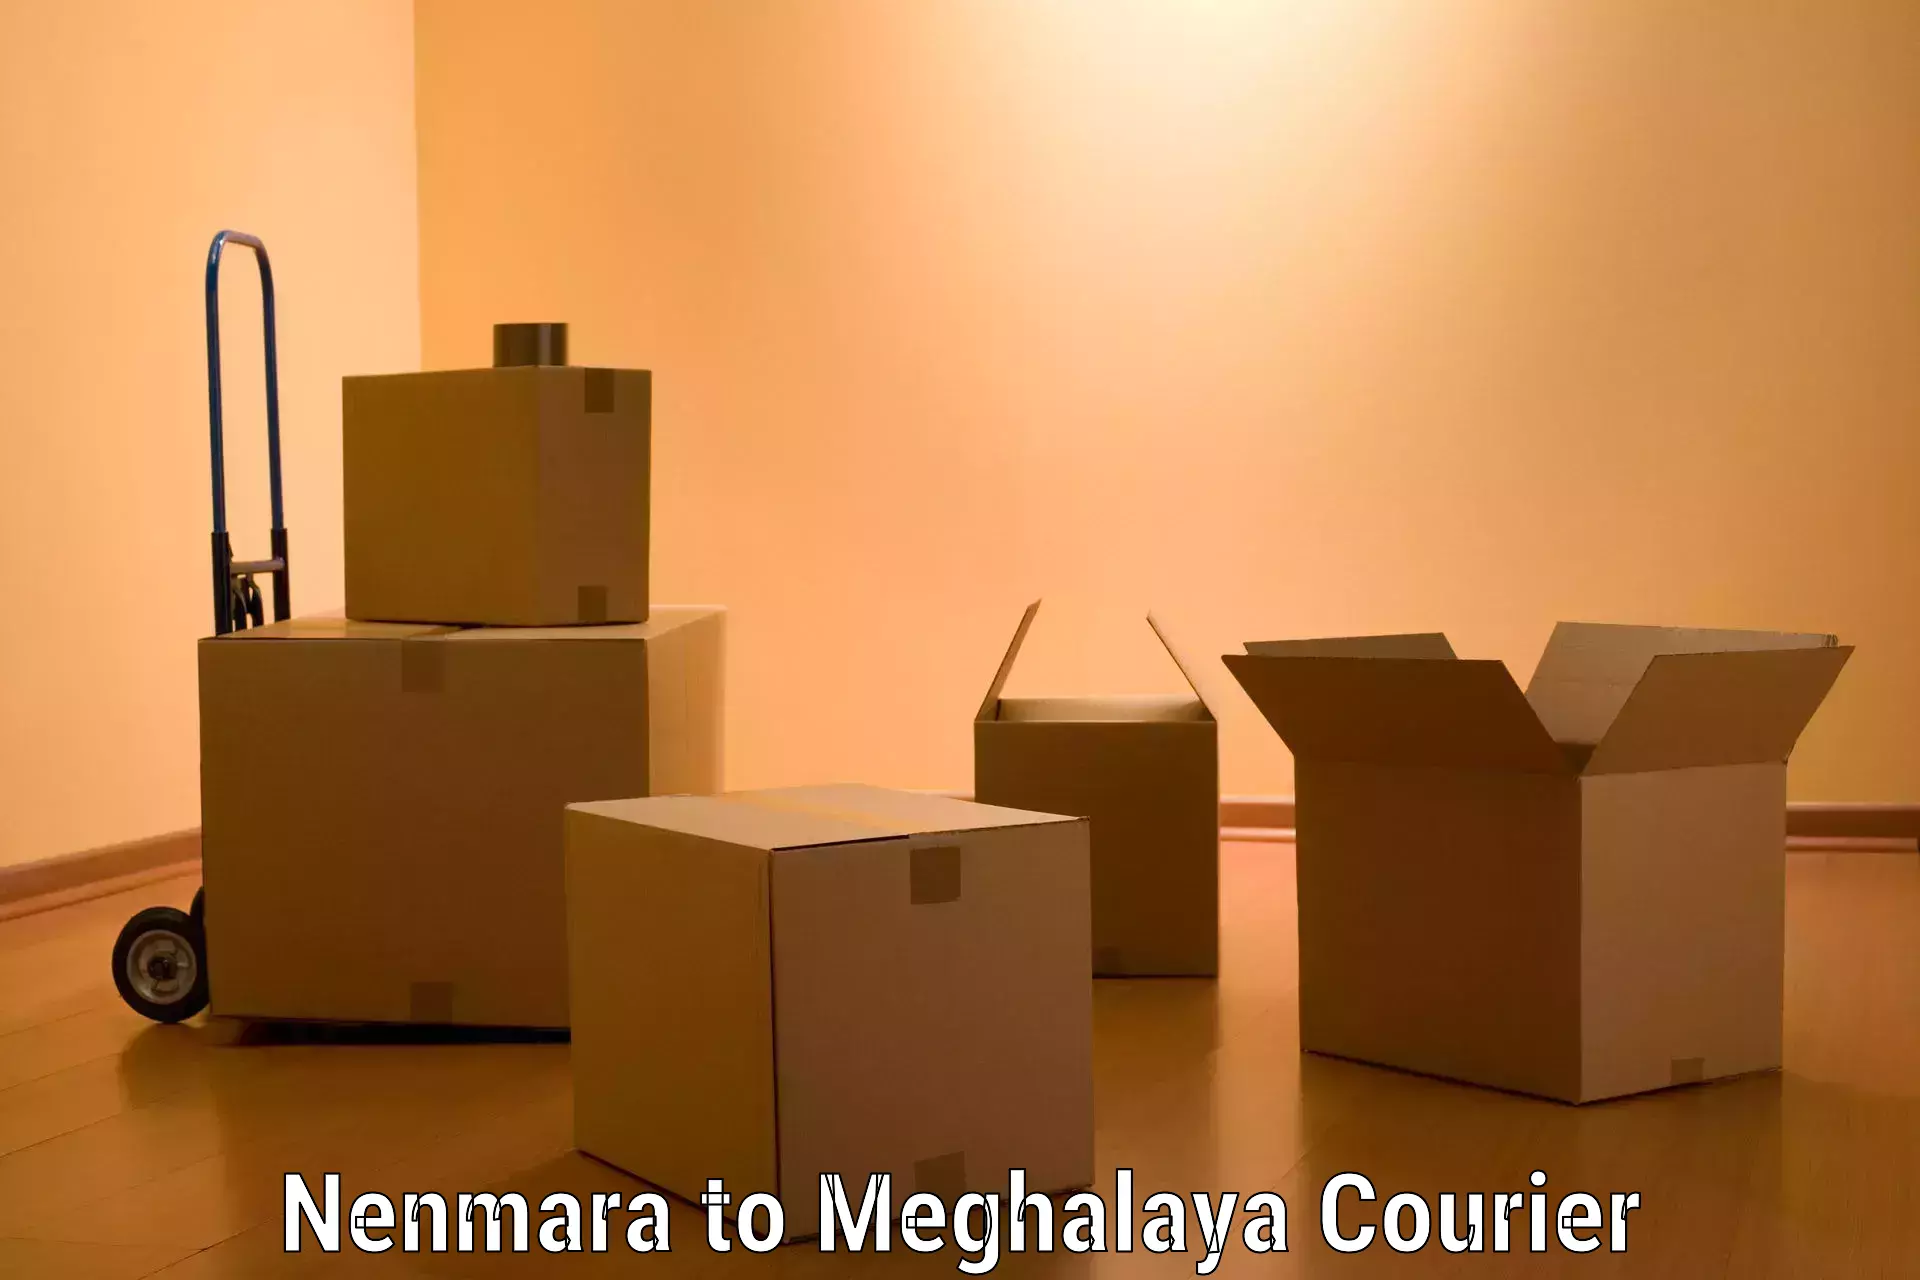 Furniture relocation experts Nenmara to Meghalaya